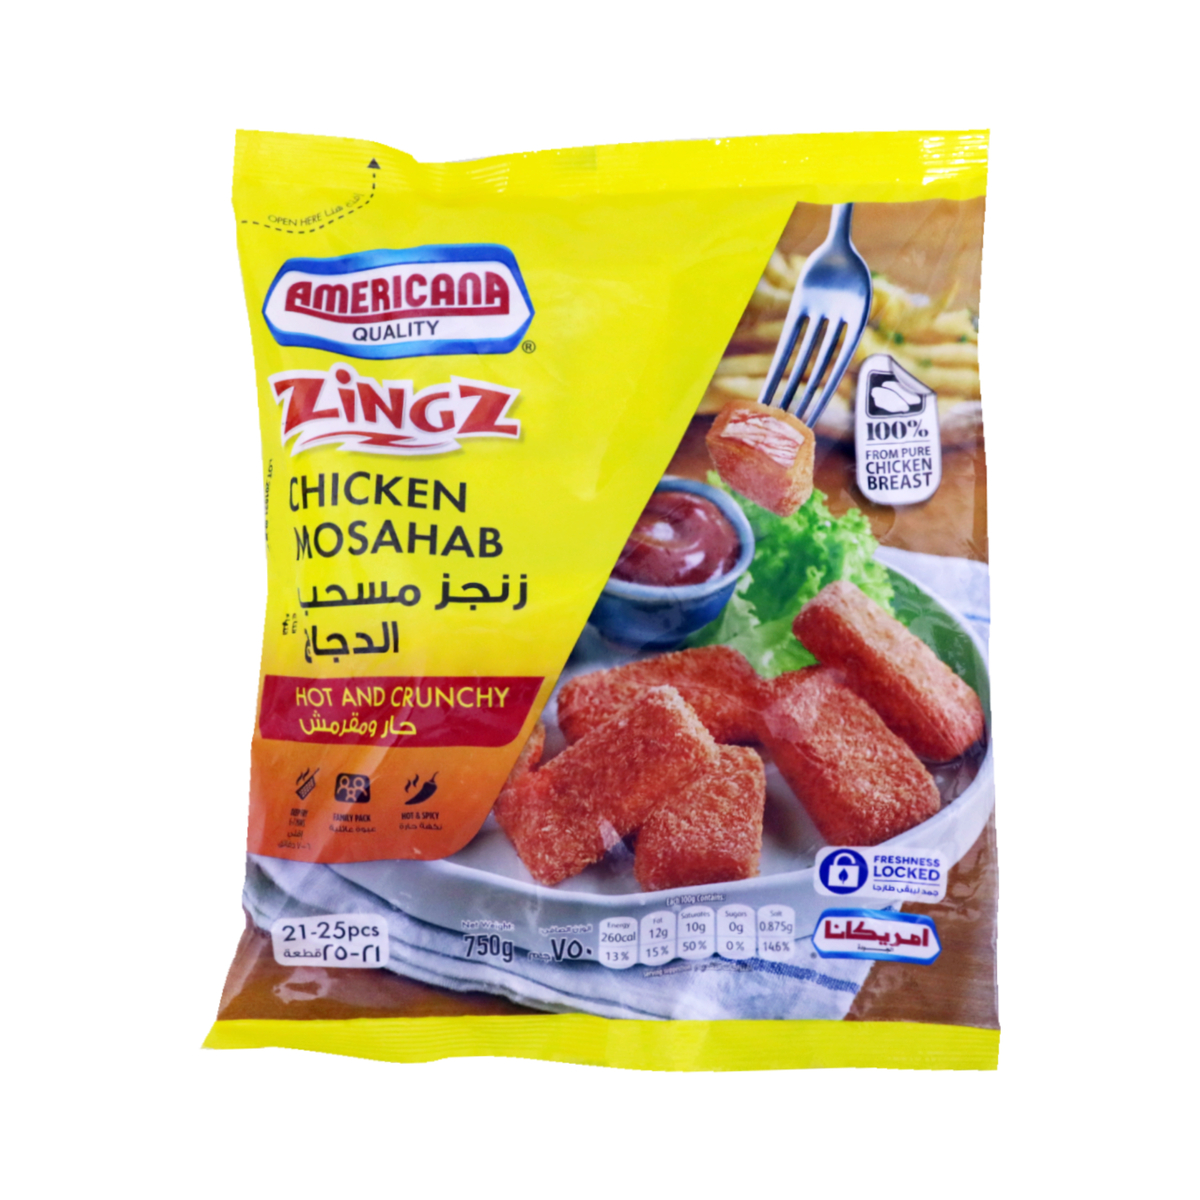 Buy Americana Zingz Chicken Mosahab Hot and Crunchy 750g Online at Best Price | Nuggets | Lulu KSA in Saudi Arabia